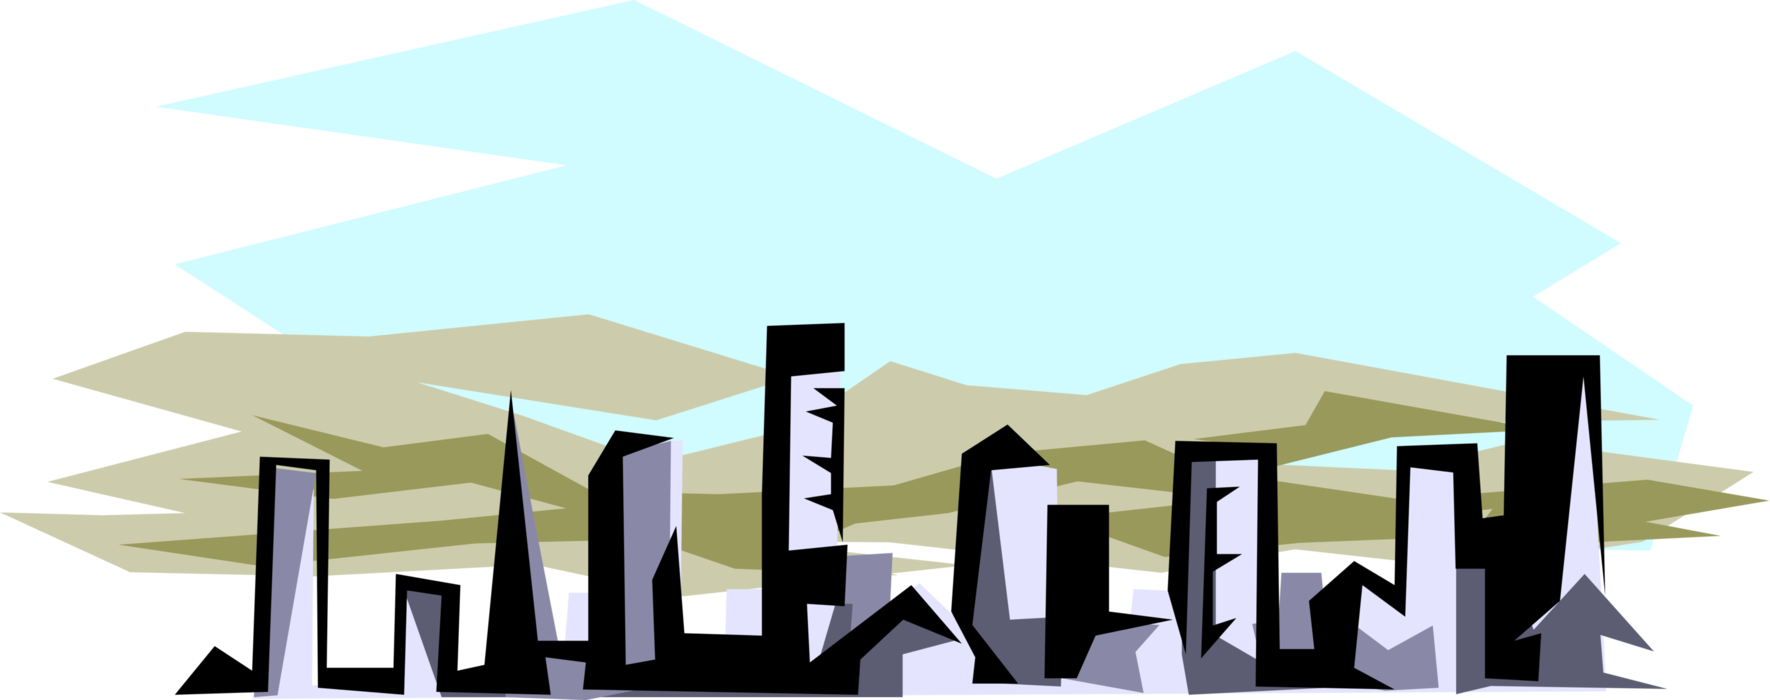 Vector Illustration of Urban Metropolitan City Skyline with Tall Buildings